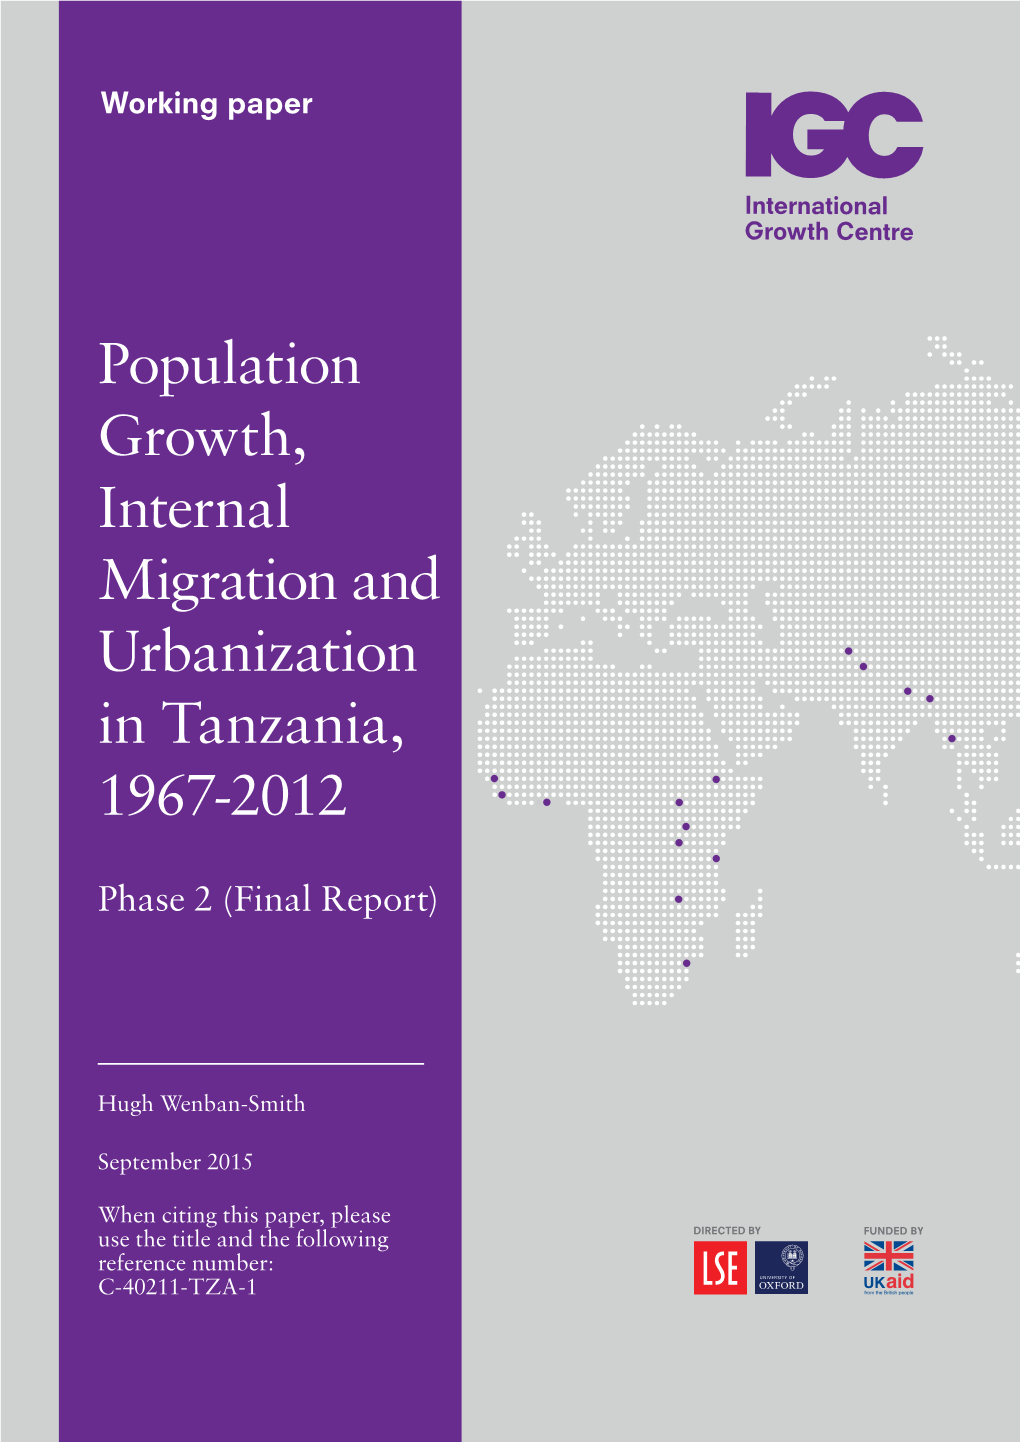 Population Growth, Internal Urbanization in Tanzania, 1967-2012